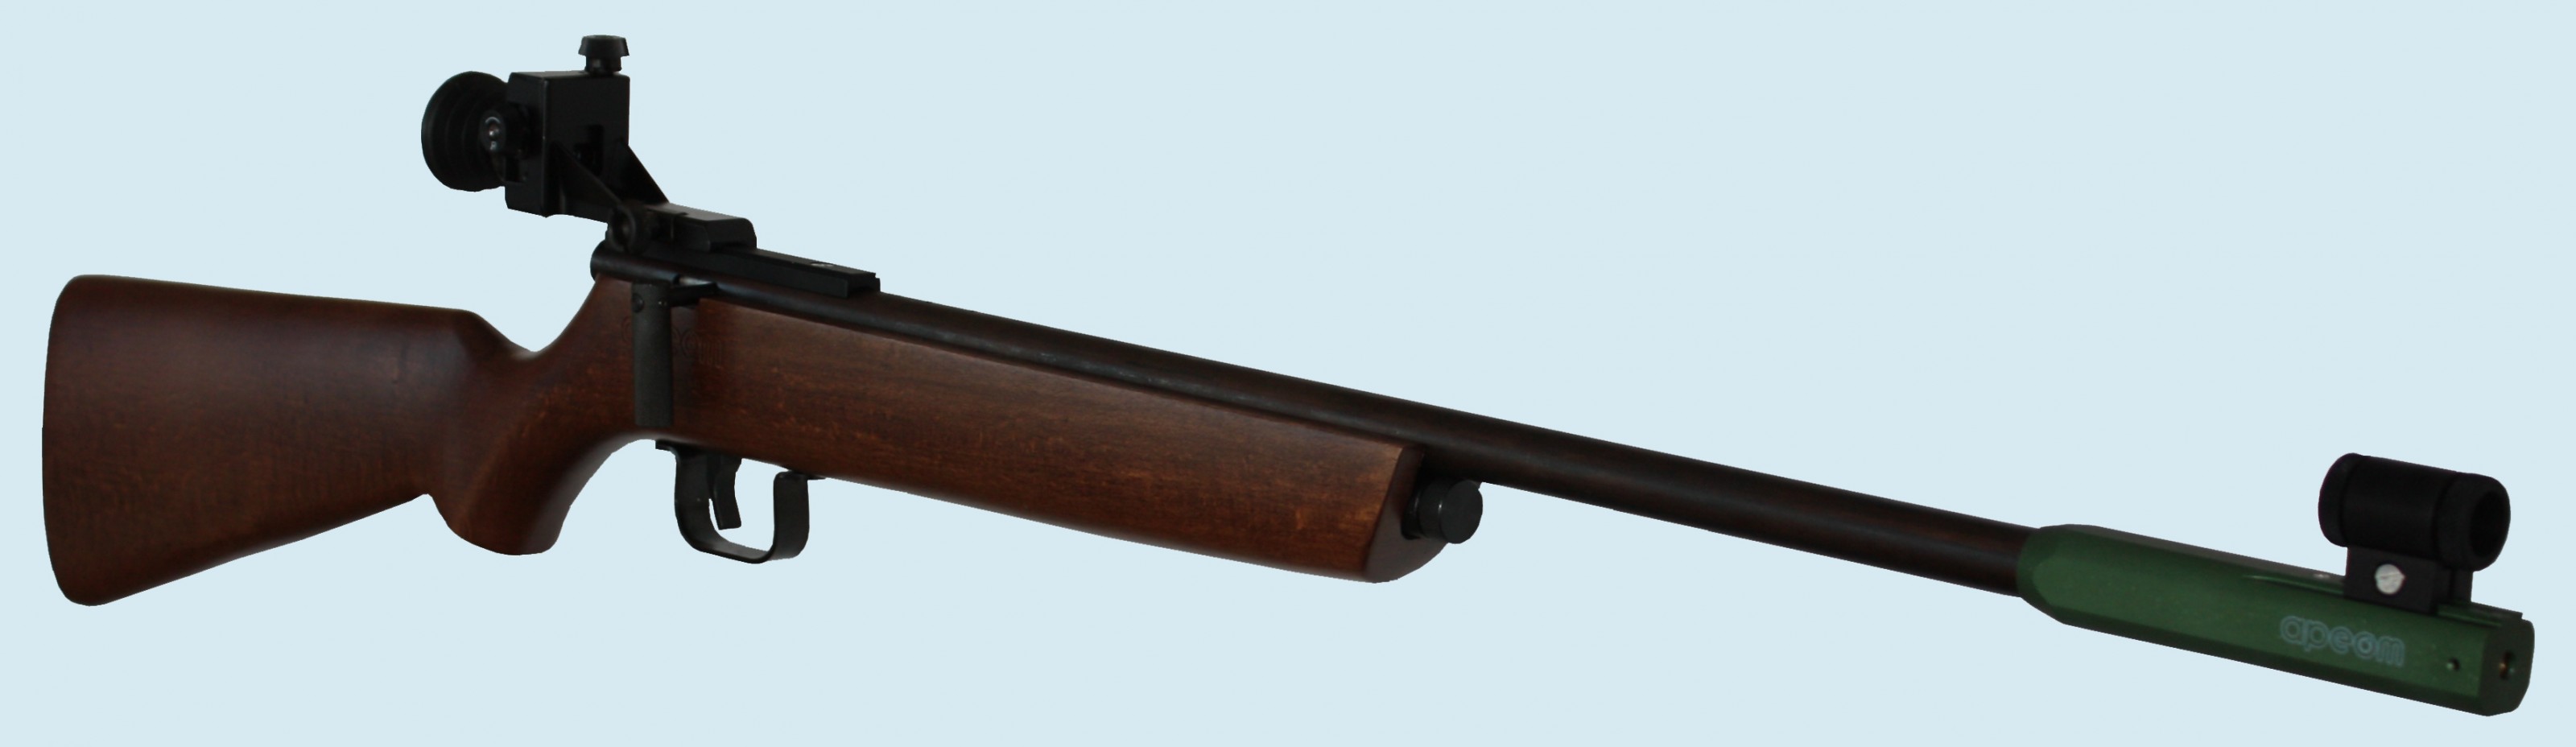 Laser Rifle E-Gun 303